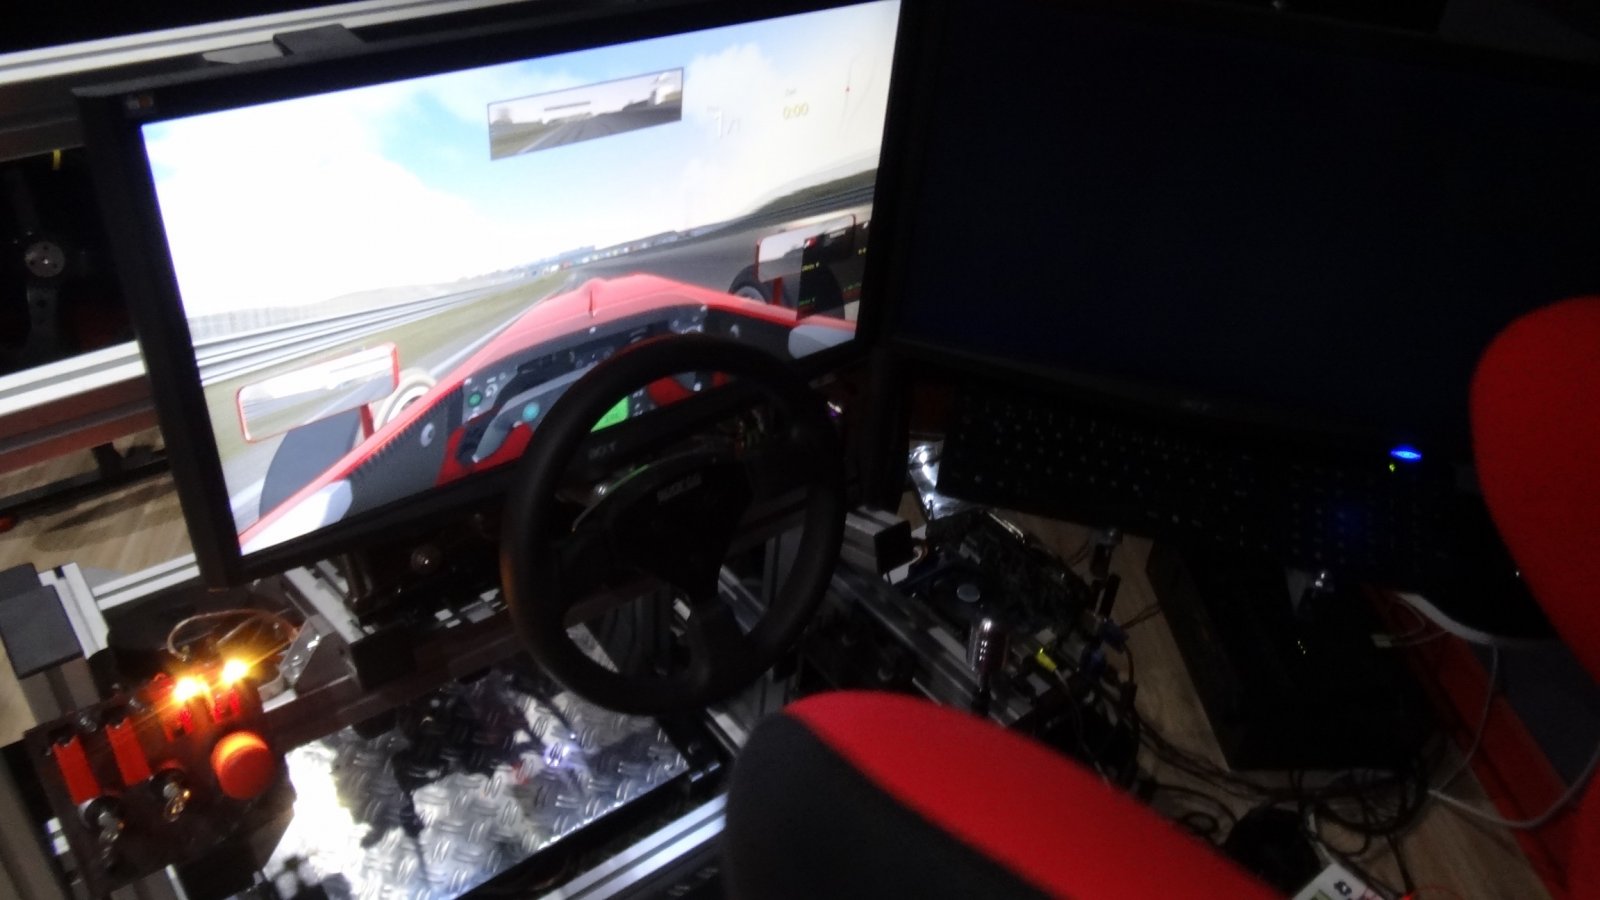 DIY Steering Wheel 200Watts DC Engine controlled by X-Sim